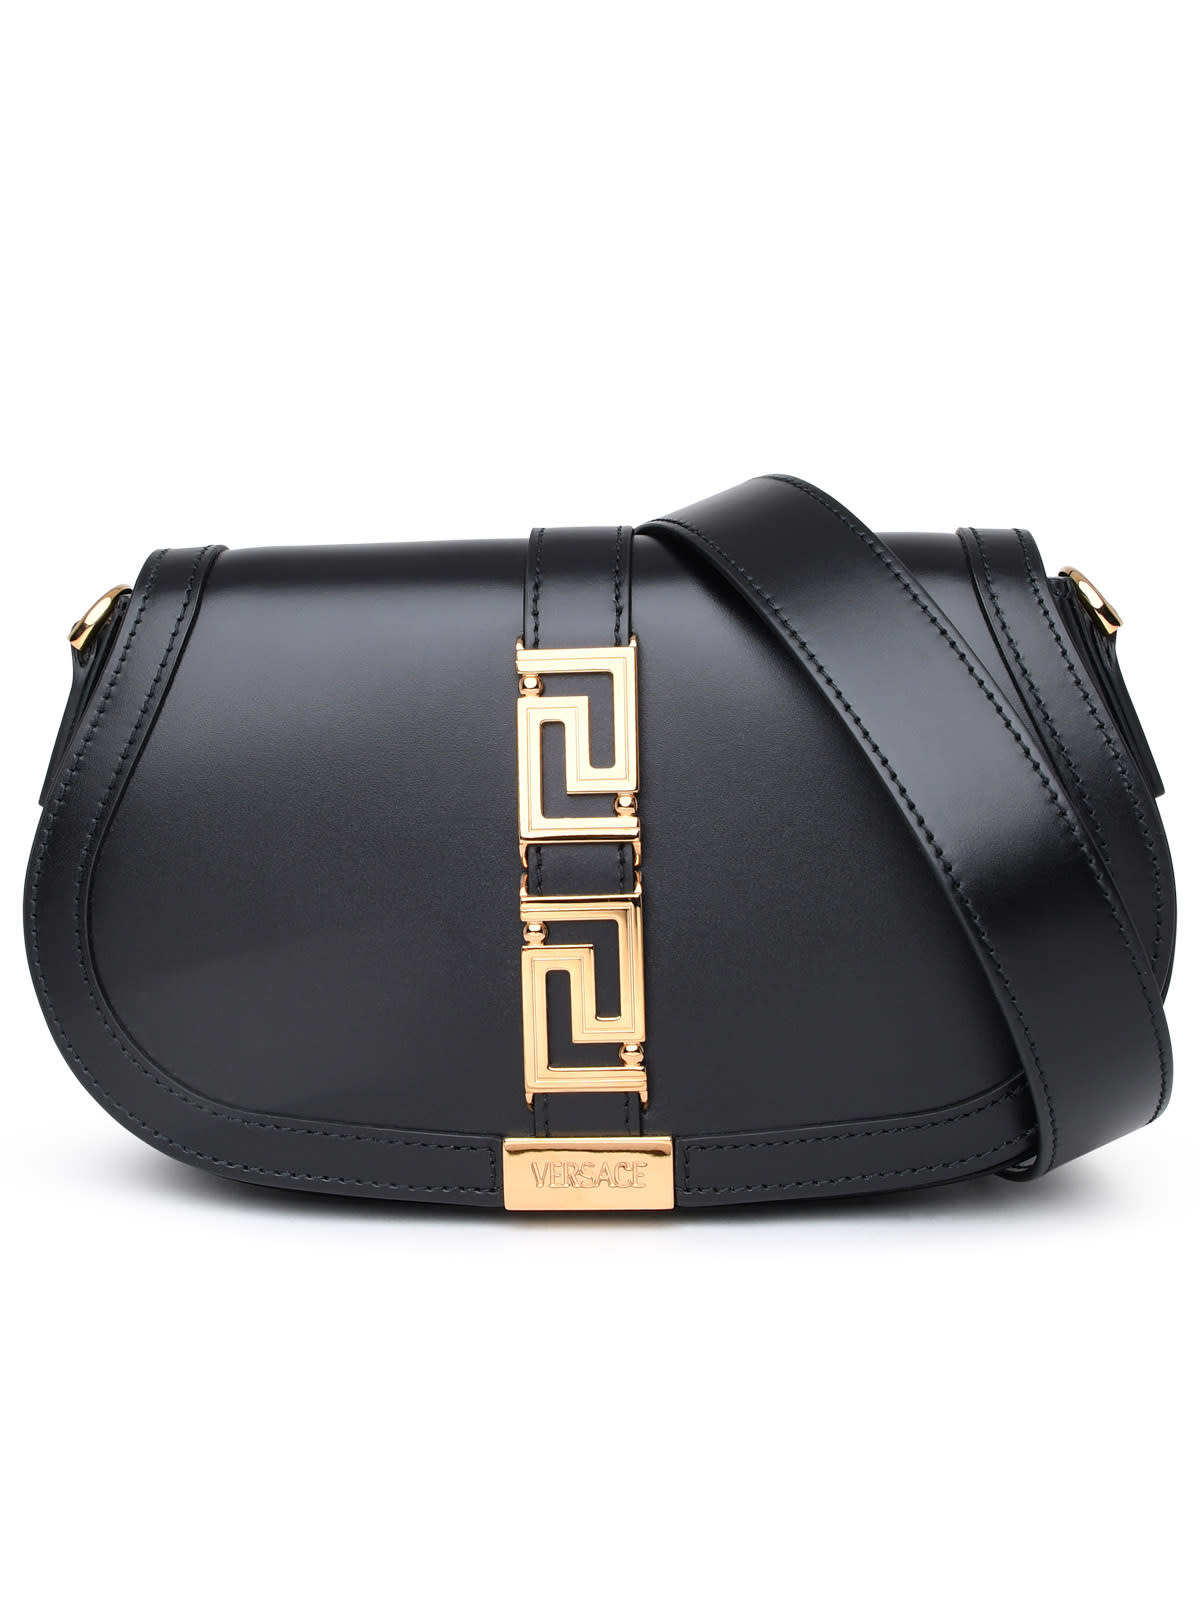 Versace Black Leather Greca Goddess Bag